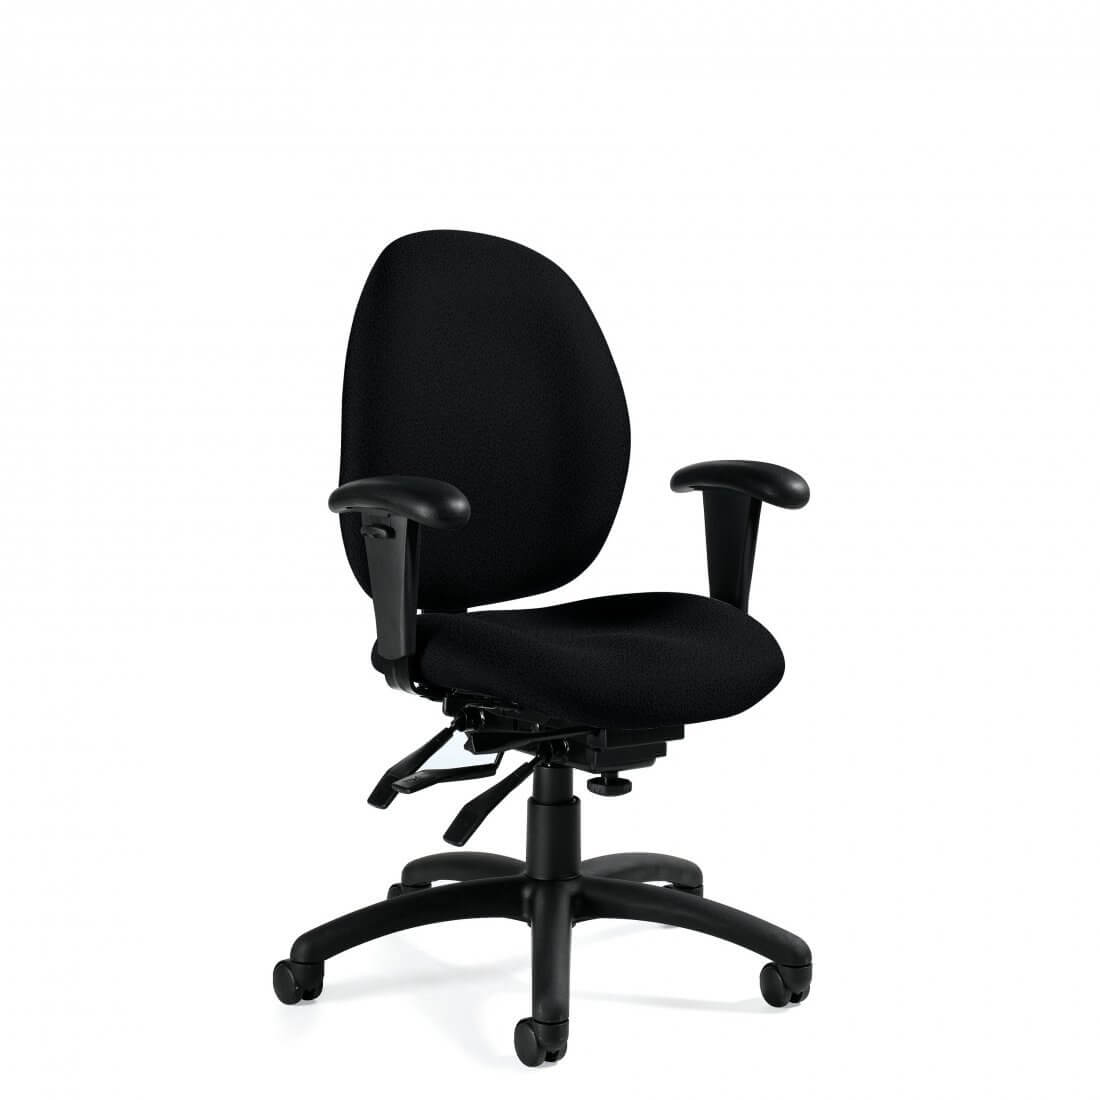 malaga-office-furniture-chairs-low-back-ergonomics-chair.jpg